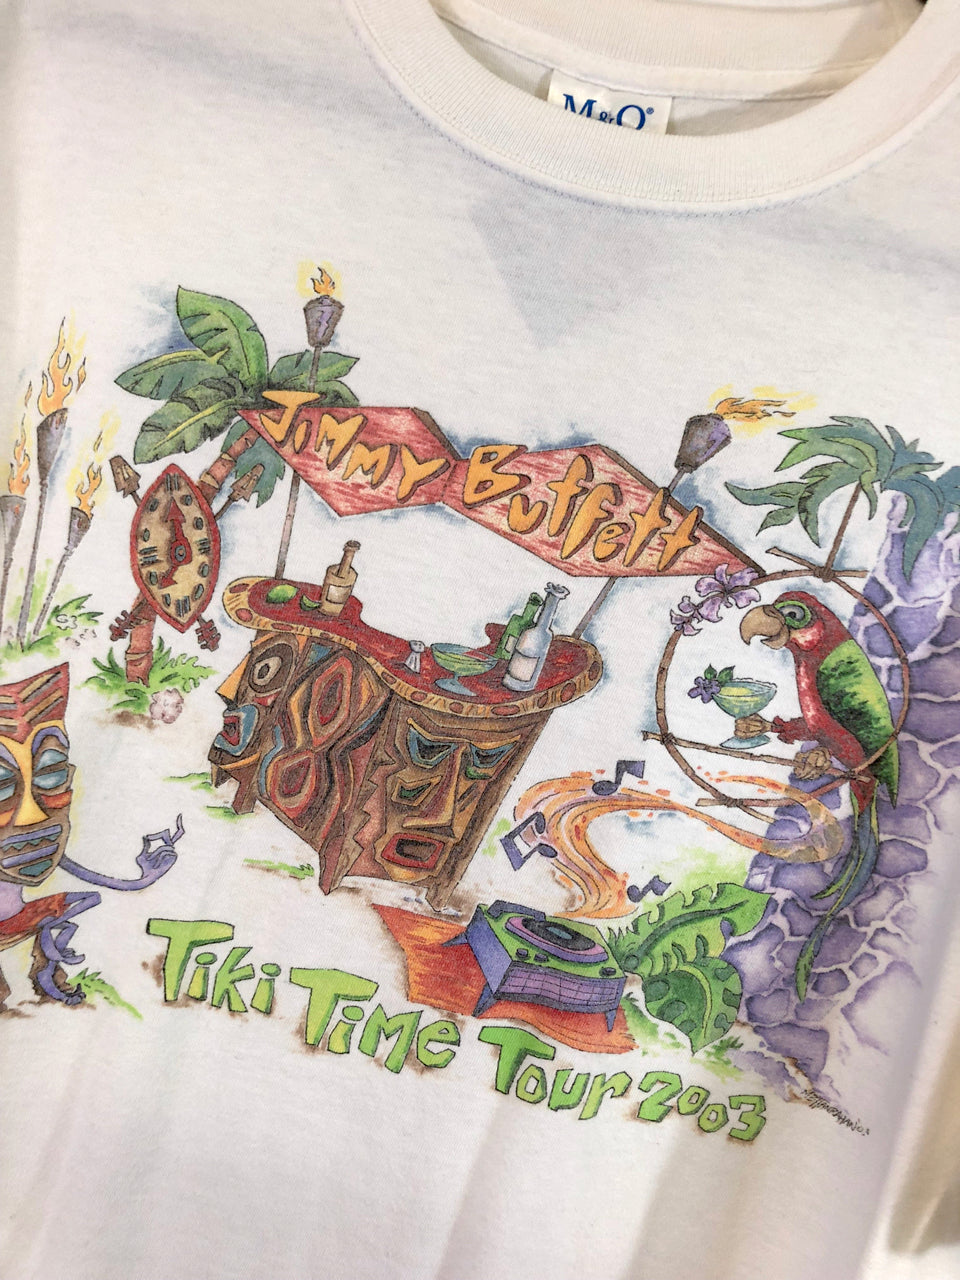 Jimmy Buffett Tiki Time Tour 2003 T-Shirt